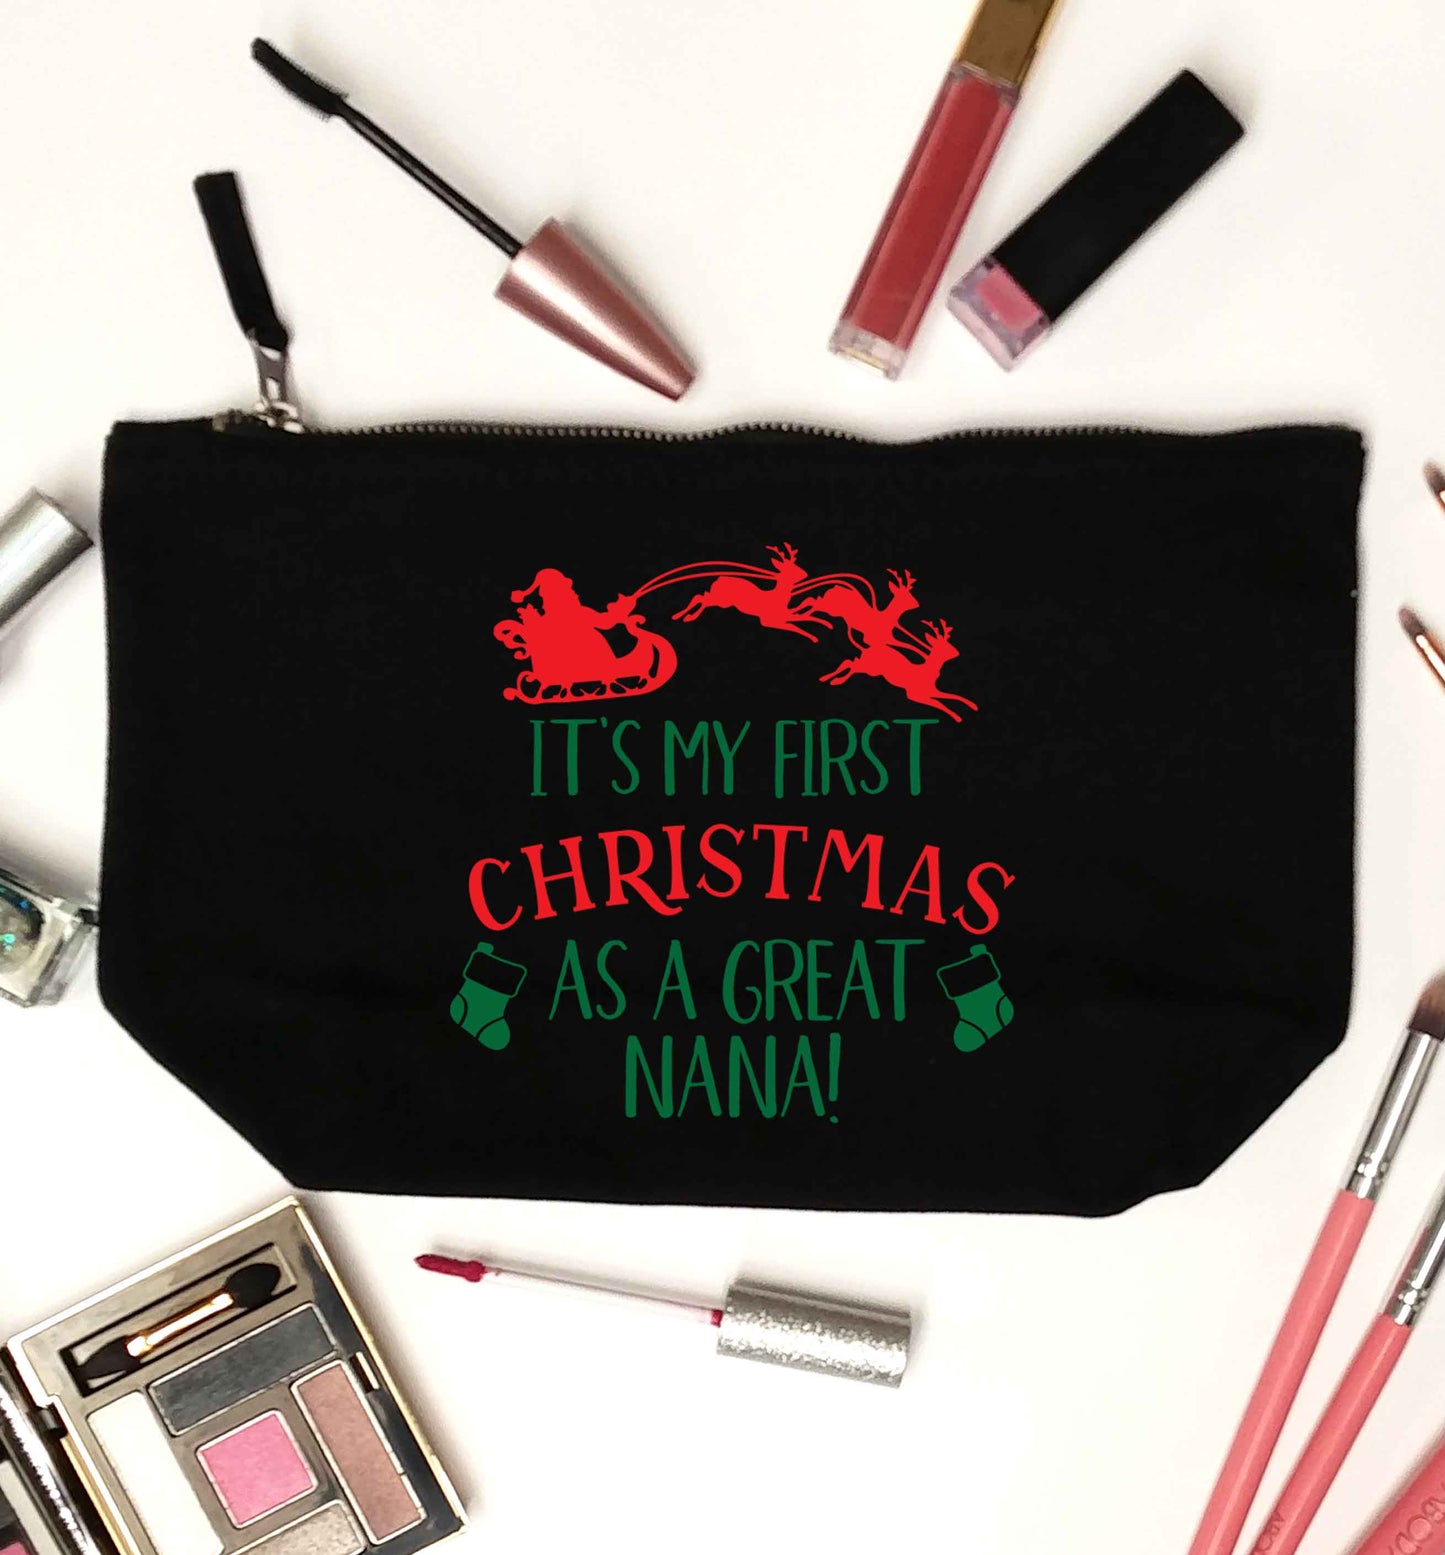 It's my first Christmas as a great nana! black makeup bag